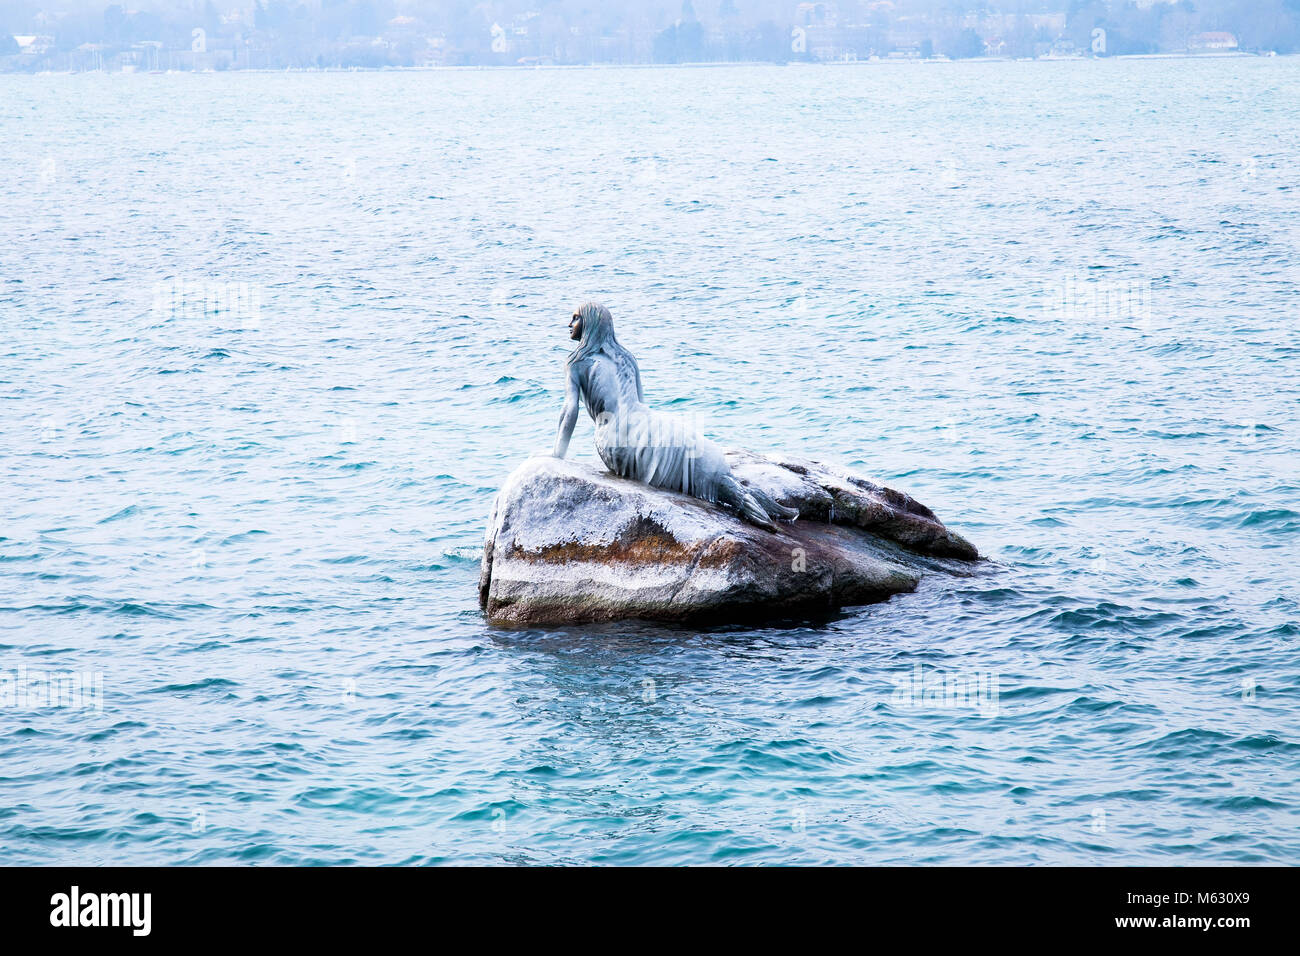 Mermaid Meer Sirene auf einem Rock See Wasser kalt Skulptur Kunst  Stockfotografie - Alamy